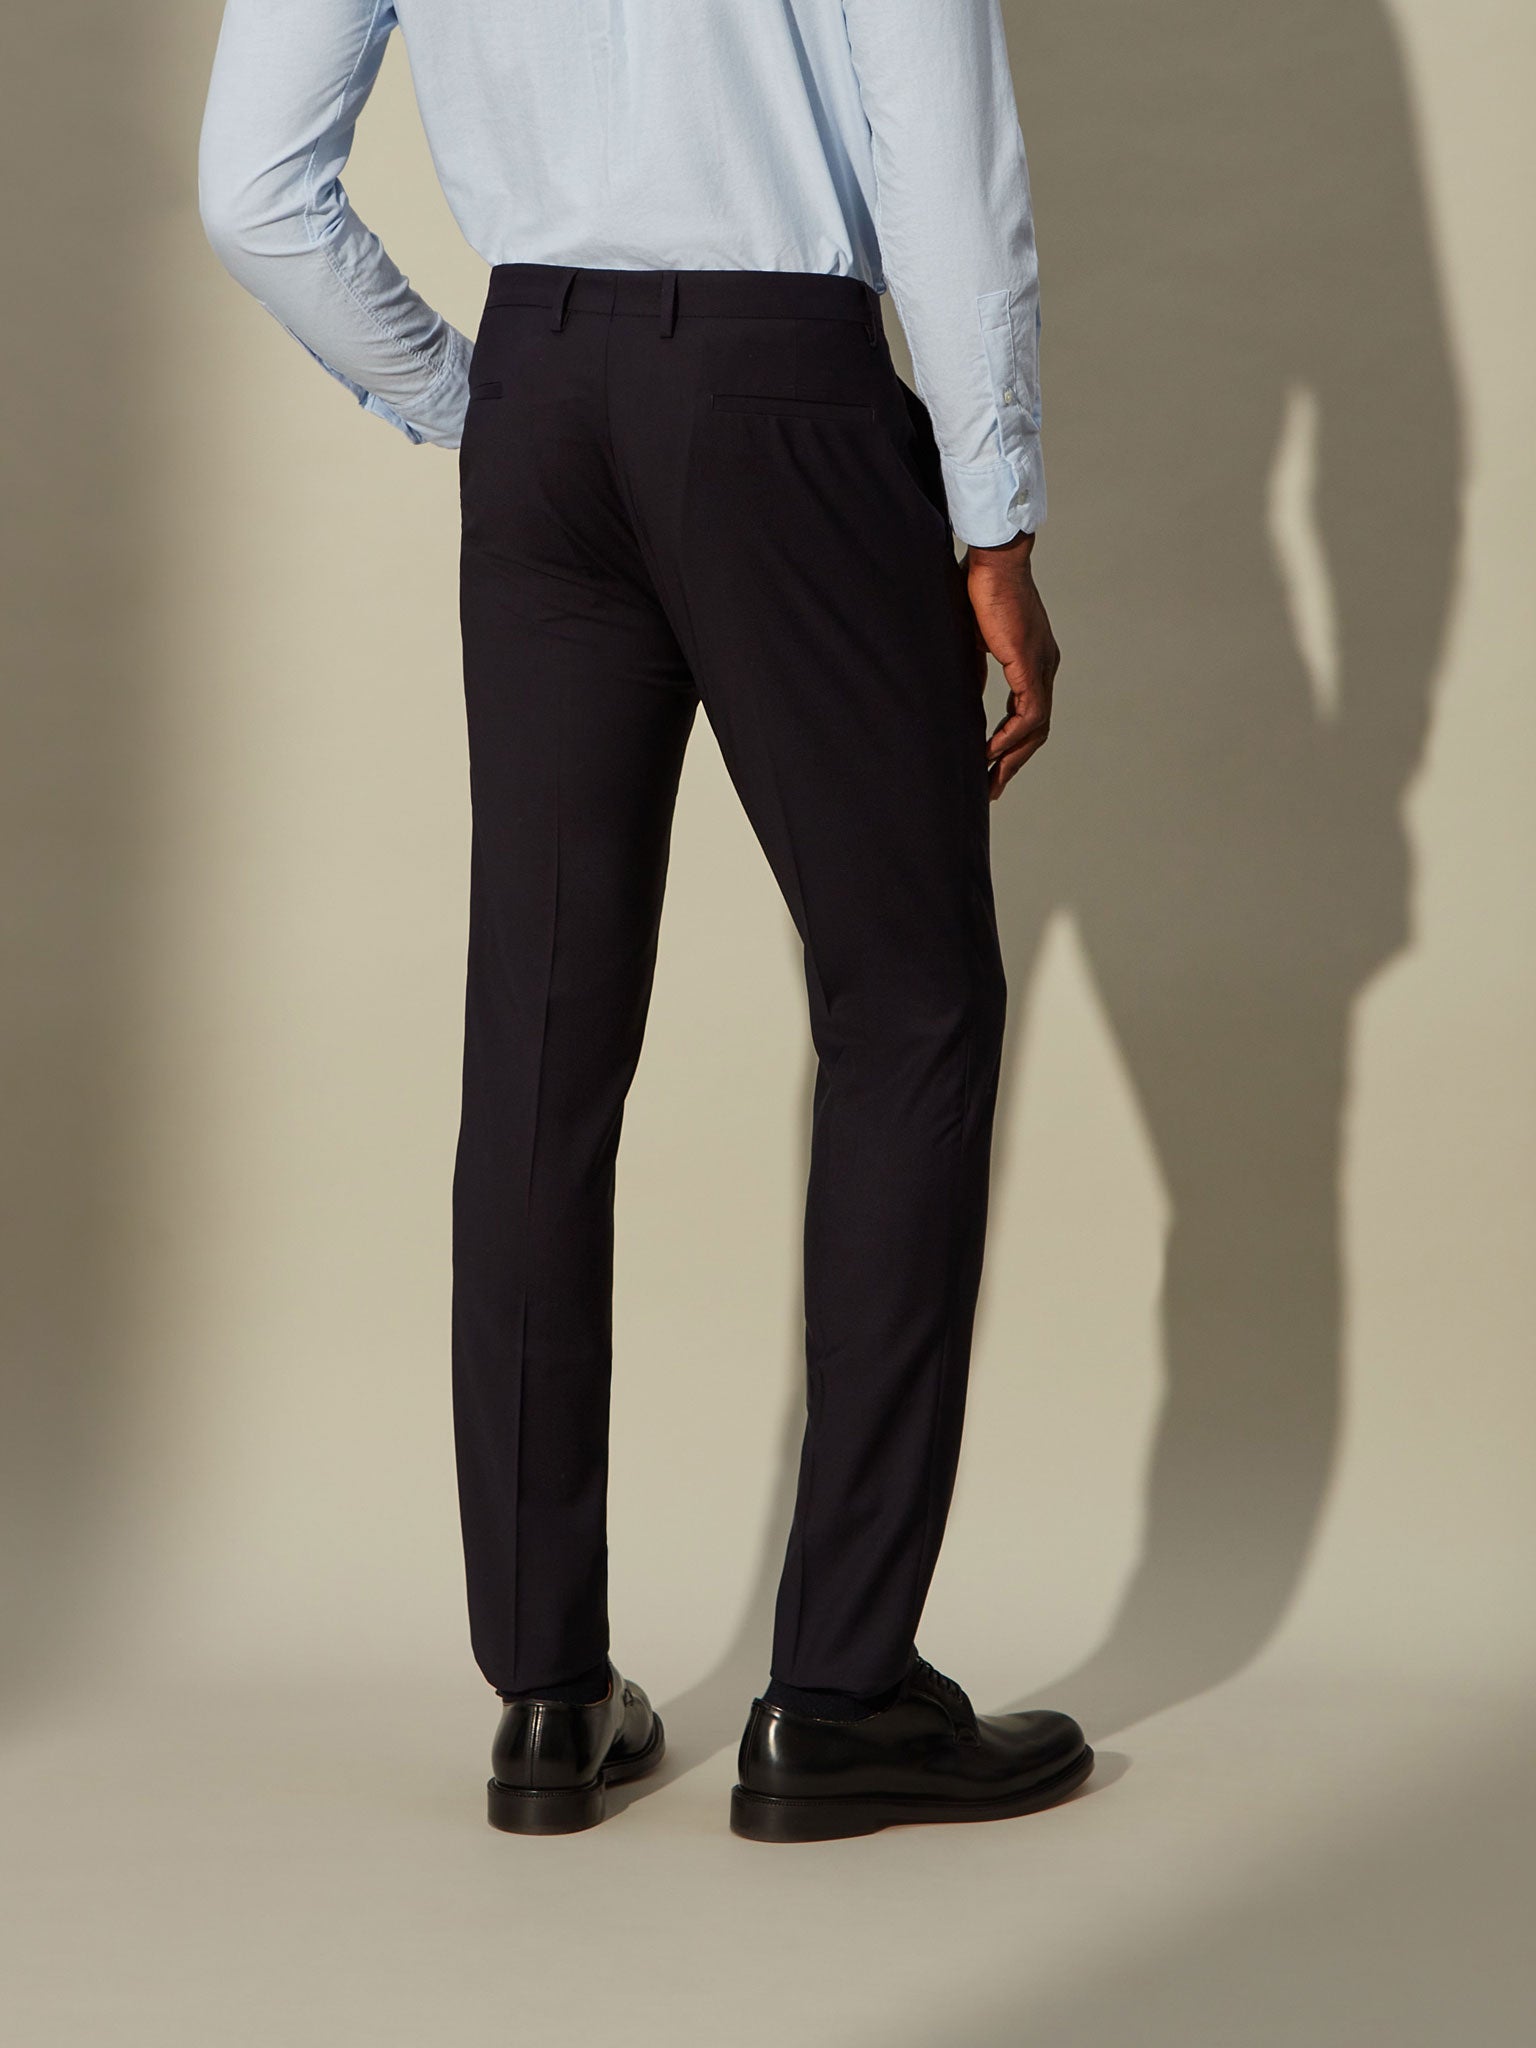 Olive Slim Leg Pants - High-Waisted Trouser Pants - Office Pants - Lulus